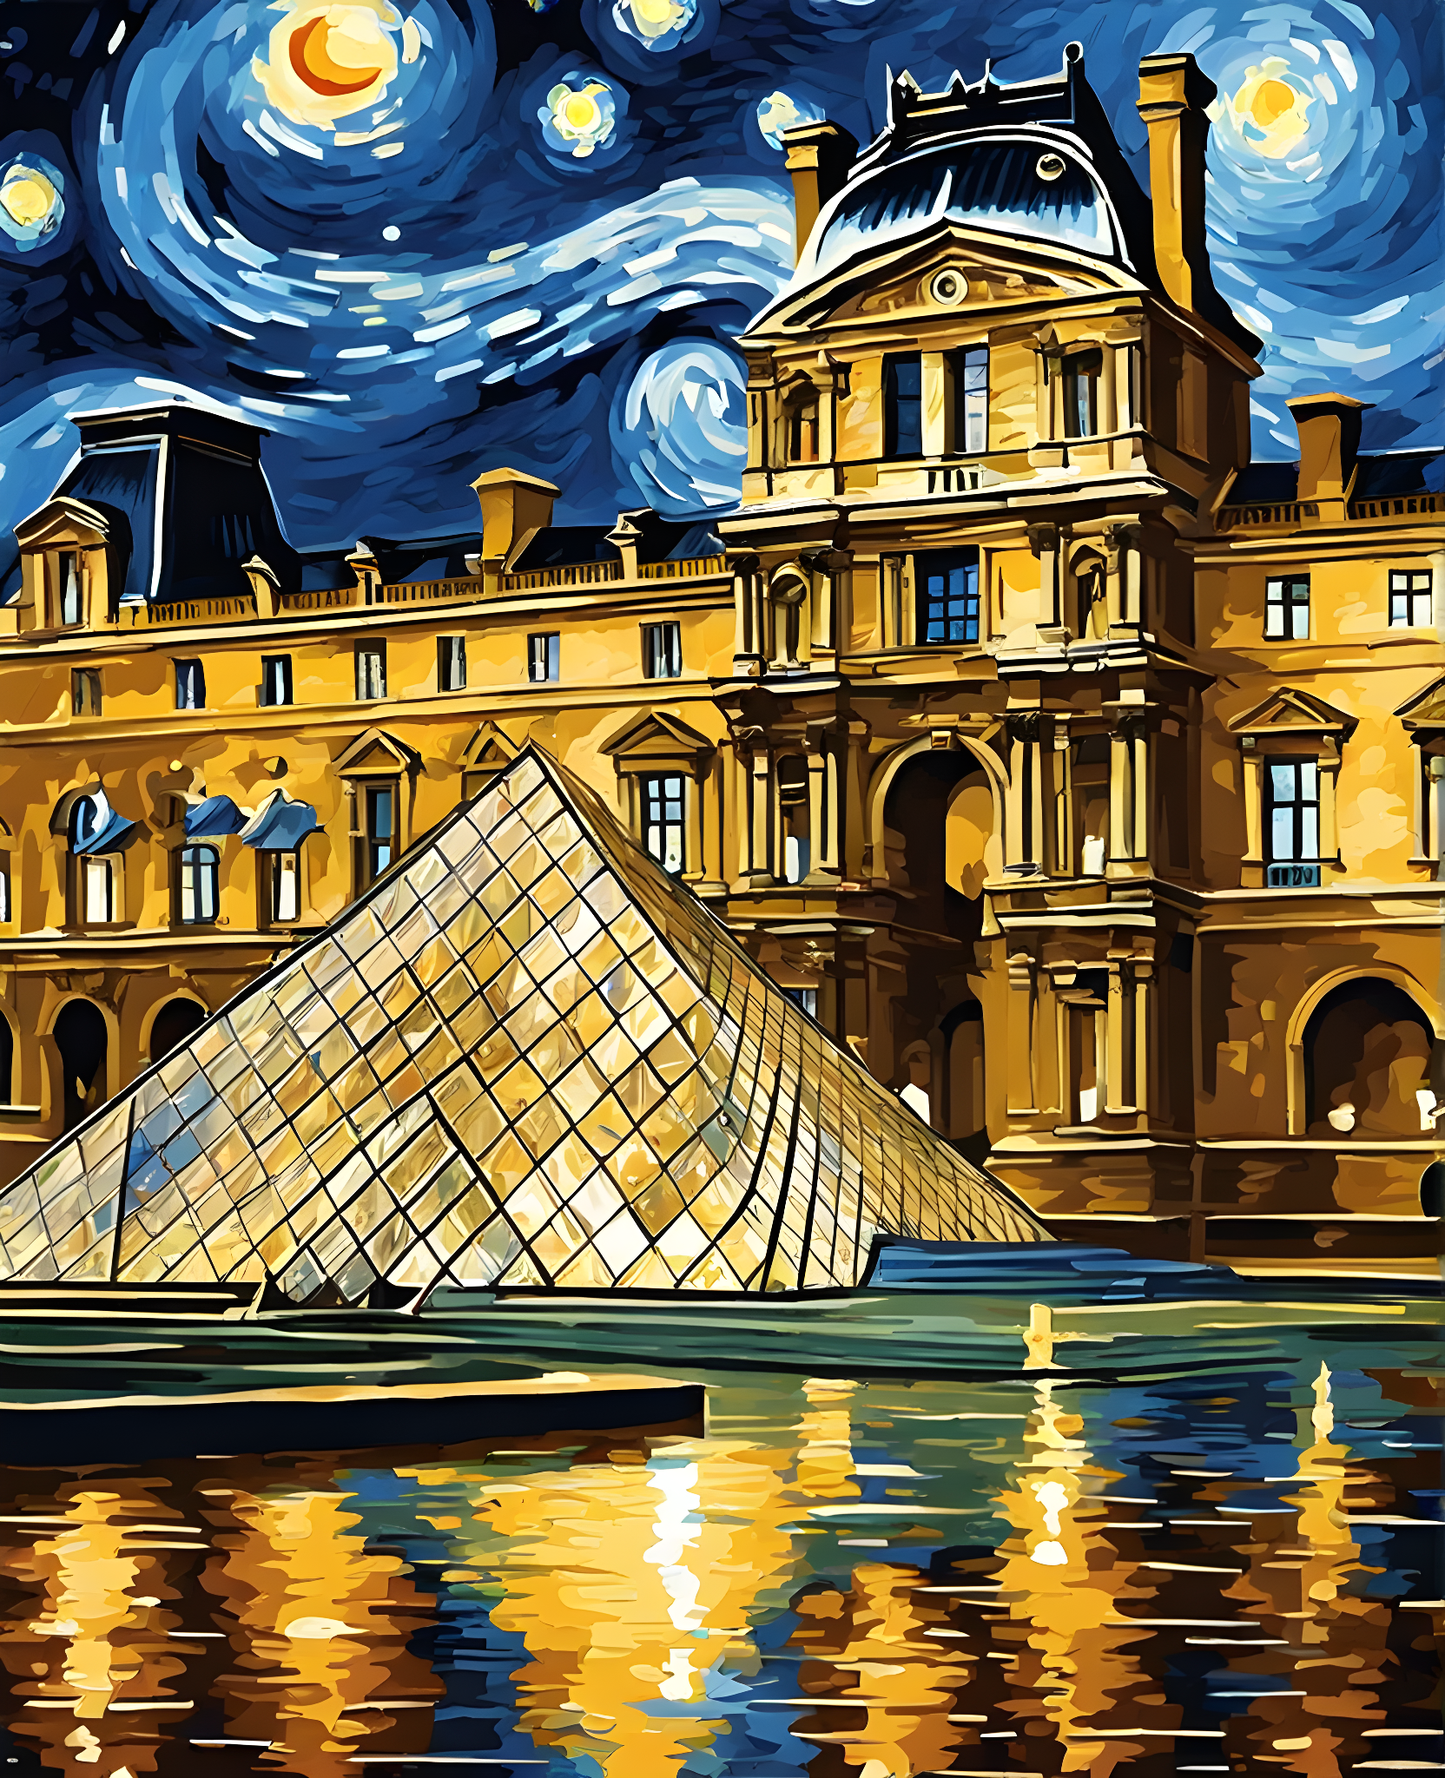 Castles OD - Louvre Palace, France (21) - Van-Go Paint-By-Number Kit